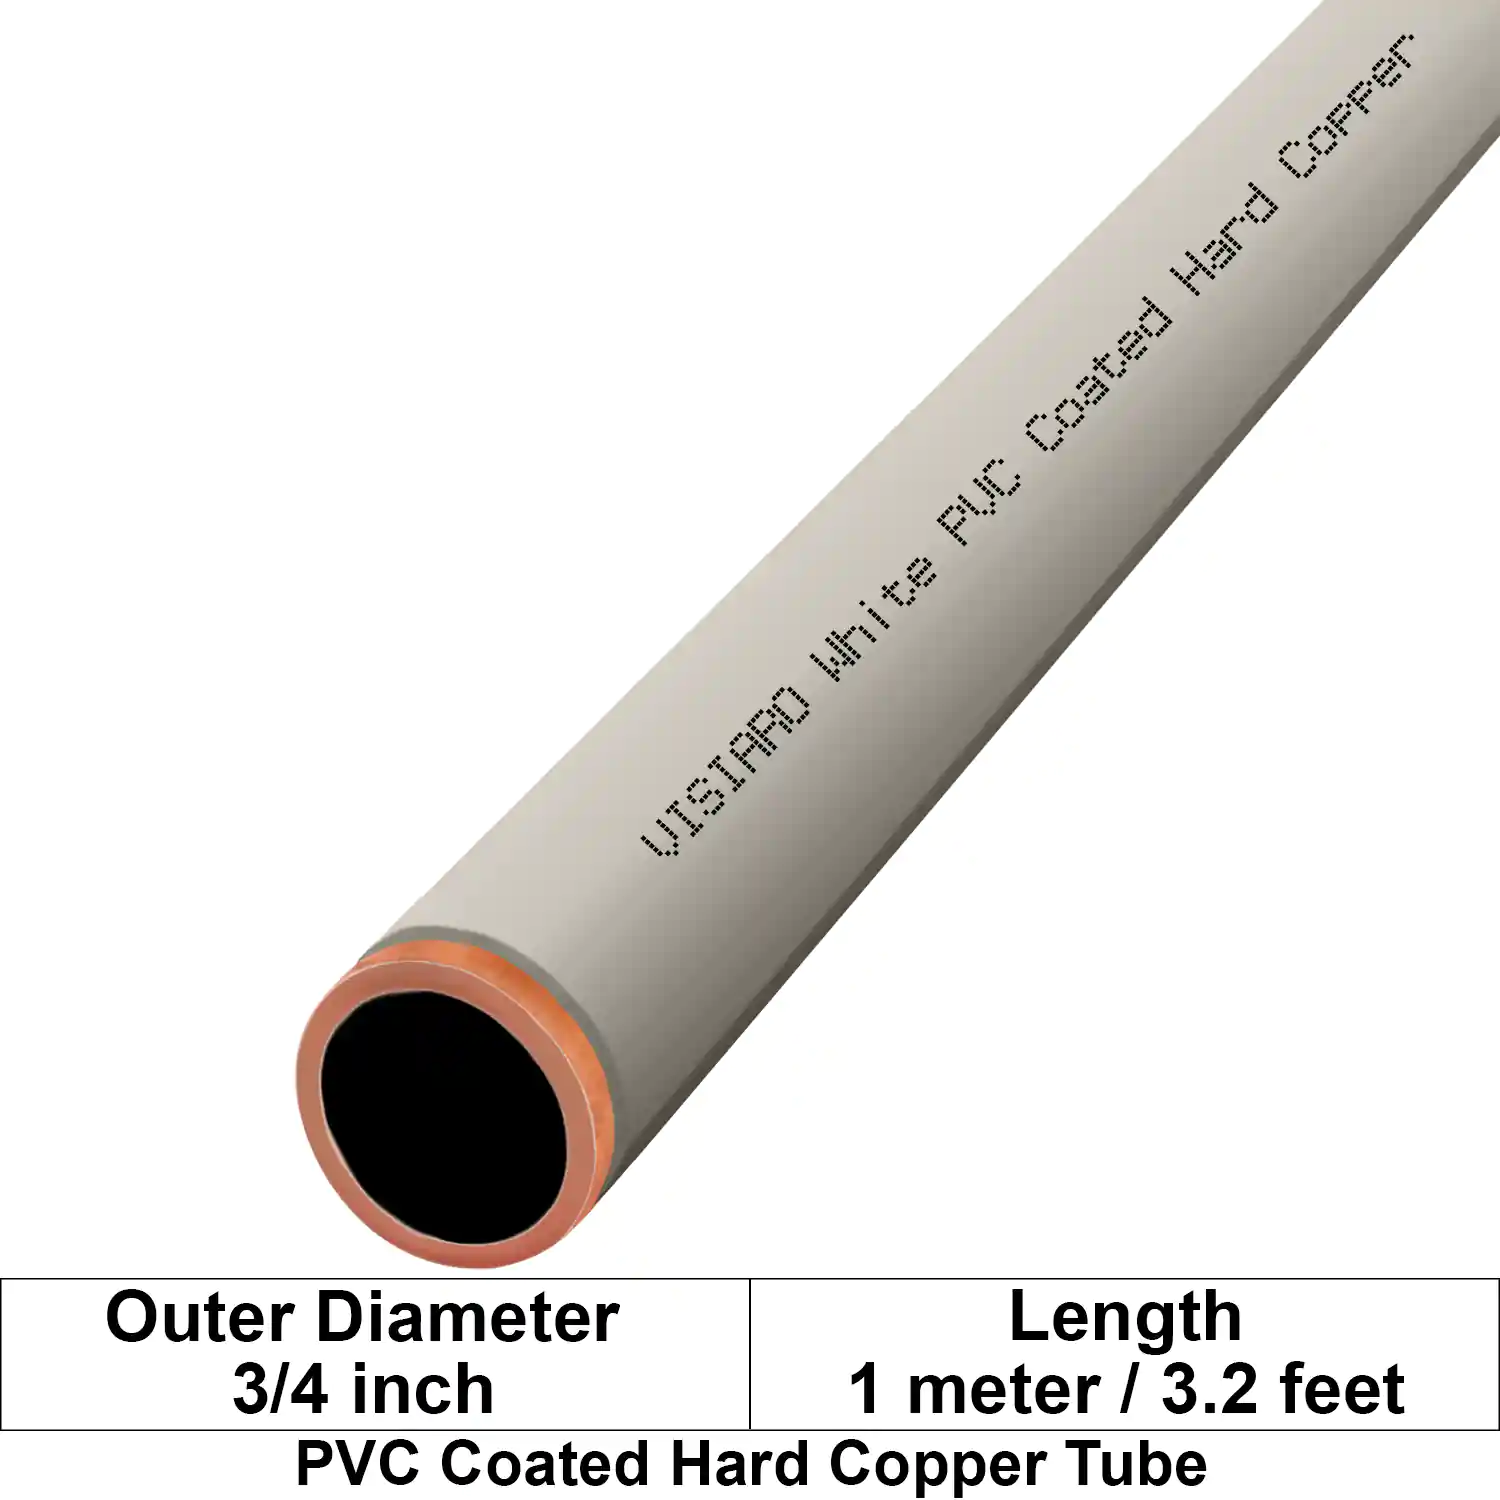 Visiaro White PVC Coated Hard Copper Tube 1mtr long Outer Diameter - 3/4 inch